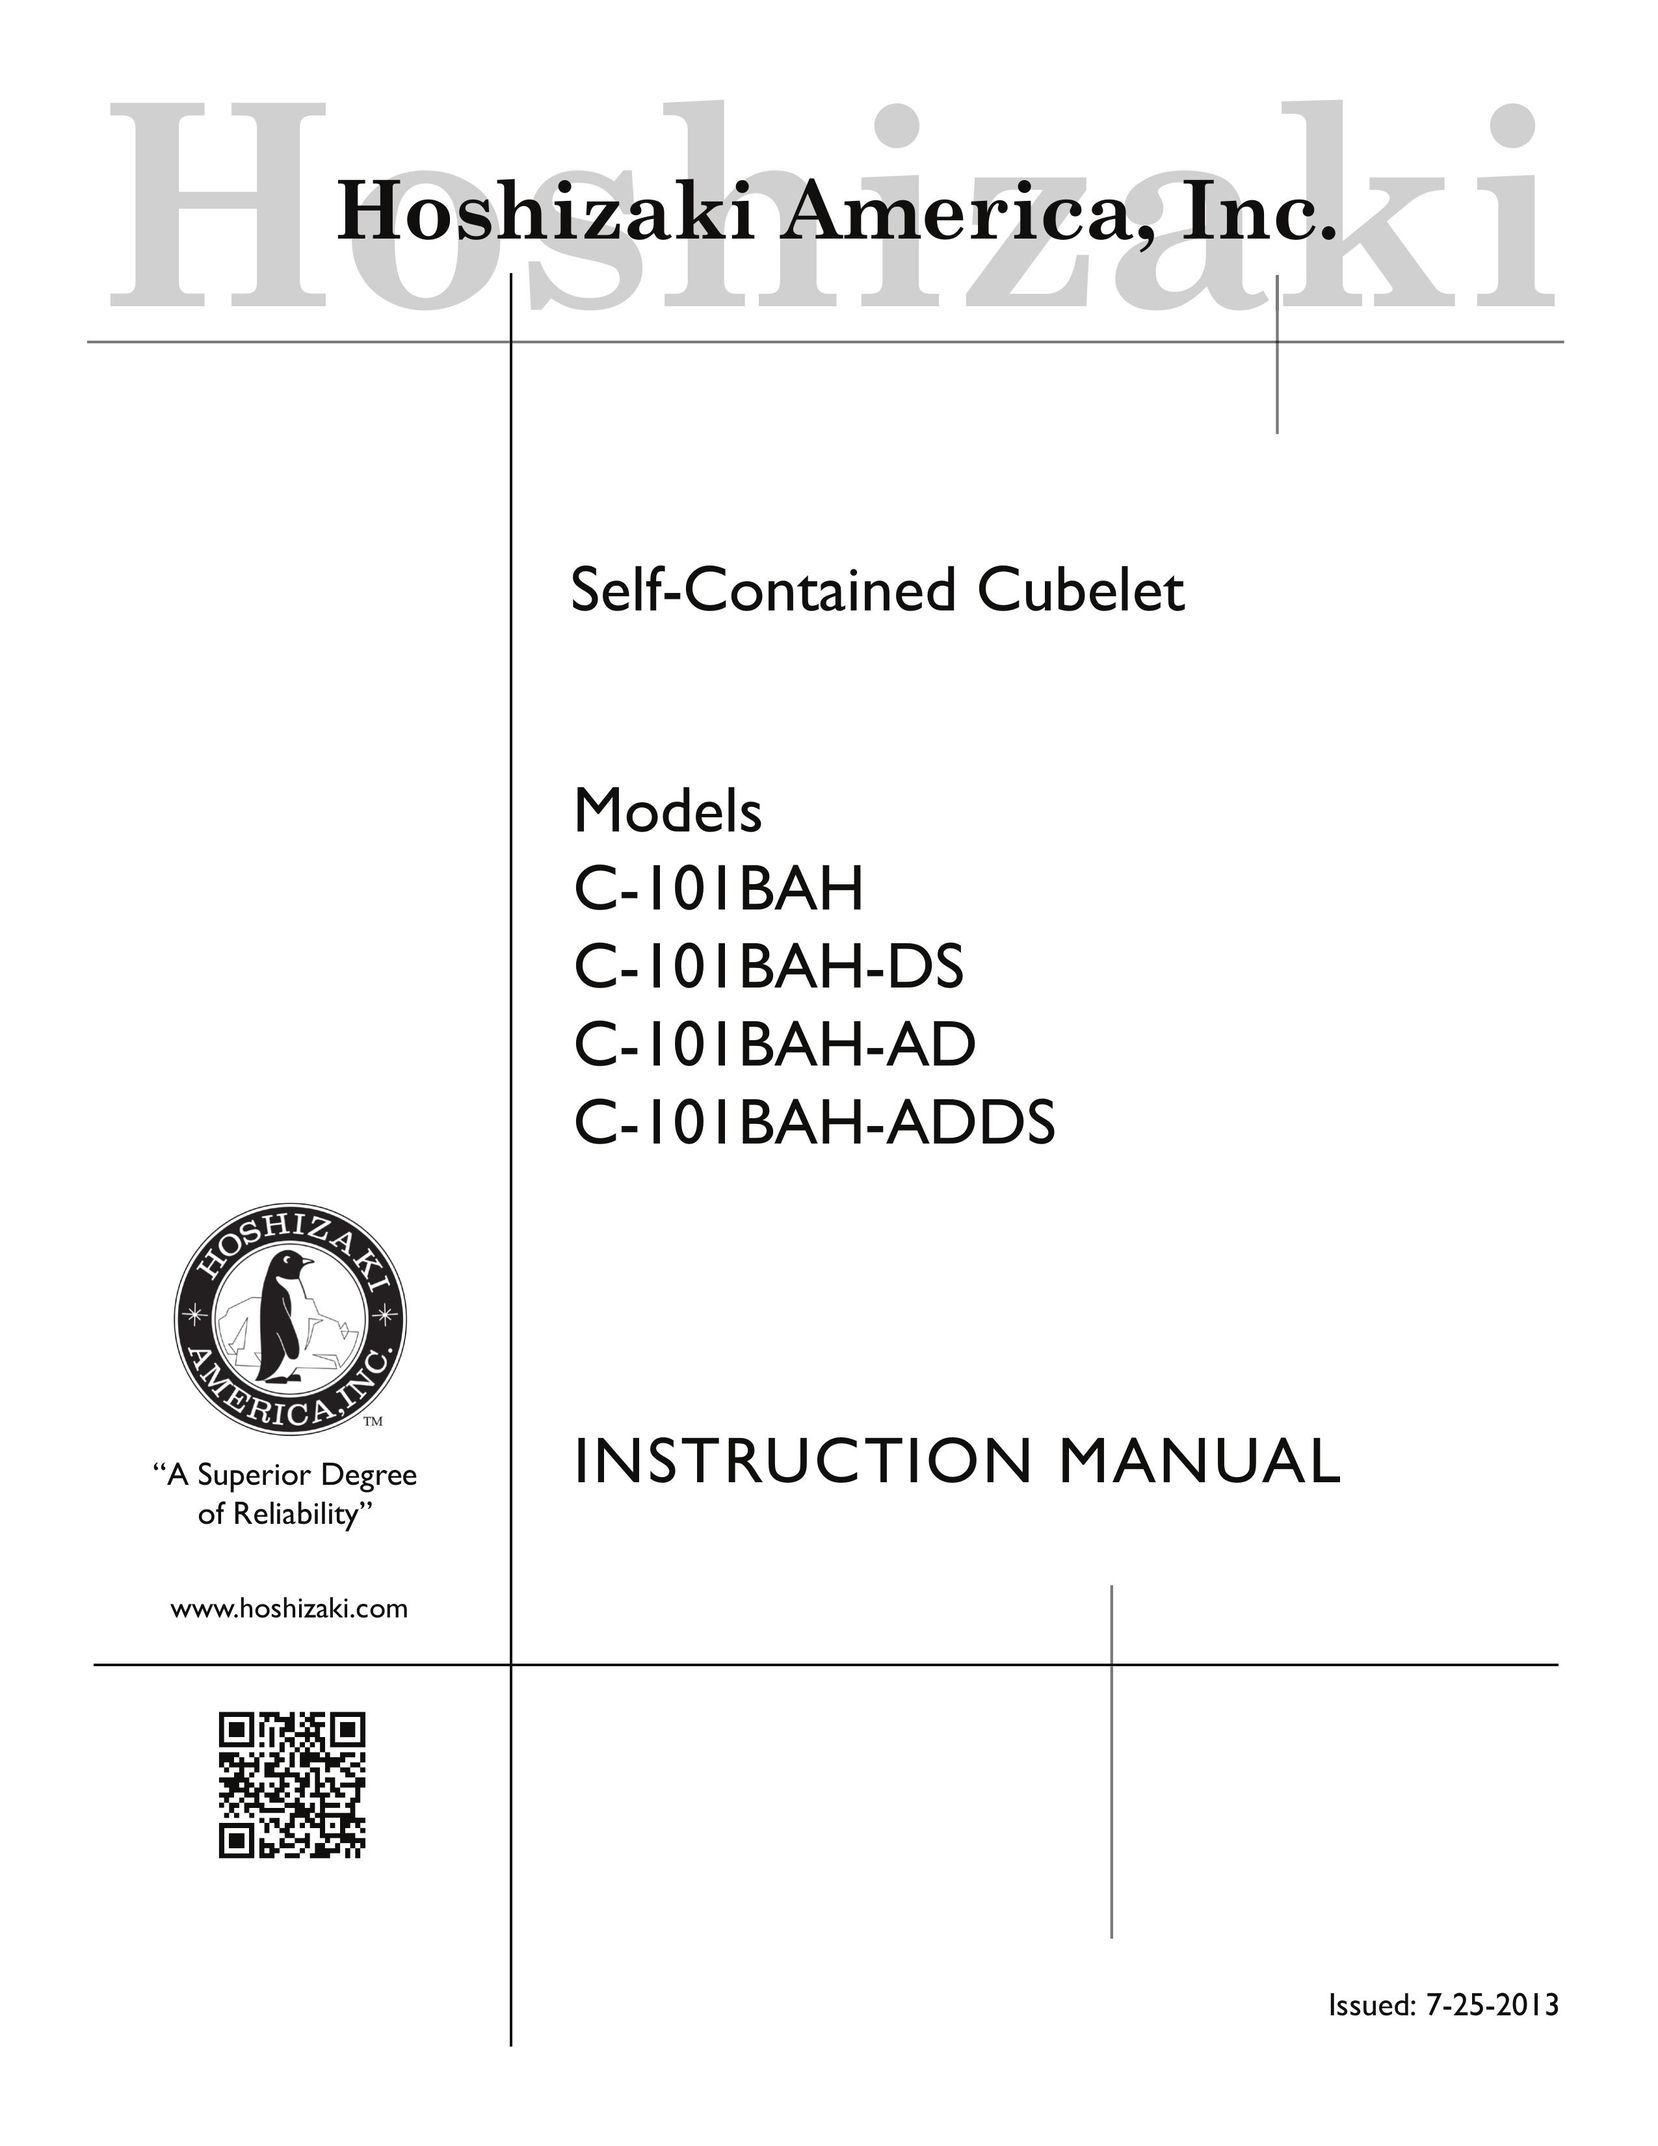 Hoshizaki C-101BAH Freezer User Manual